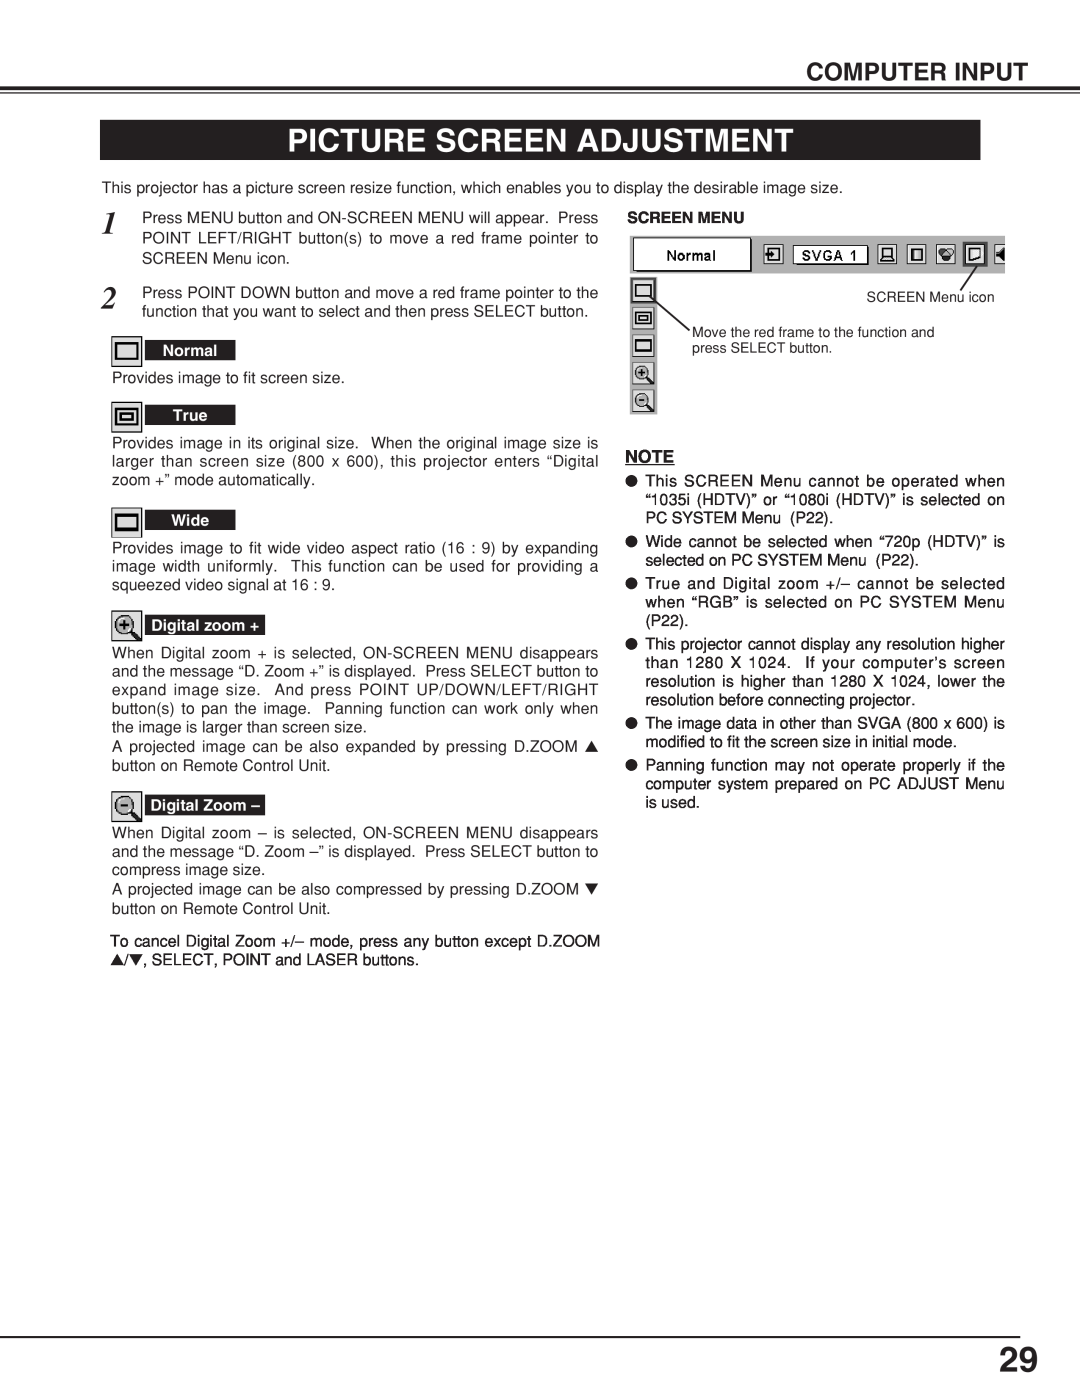 BOXLIGHT CP-18t manual Picture Screen Adjustment, Computer Input, Screen Menu 